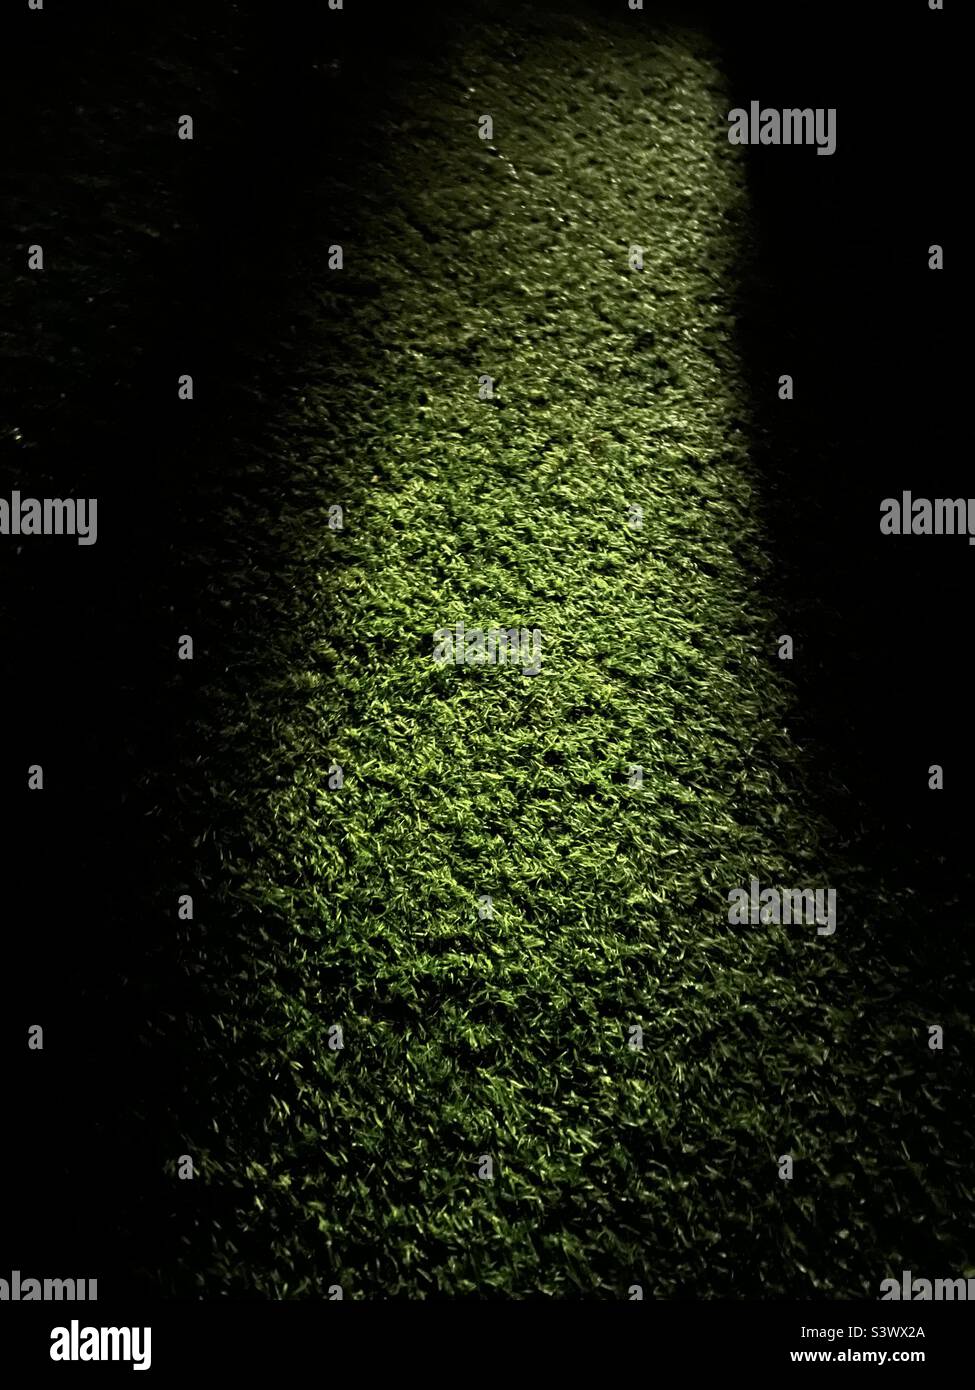 Astro turf / fake grass - iPhone pro13 Stock Photo